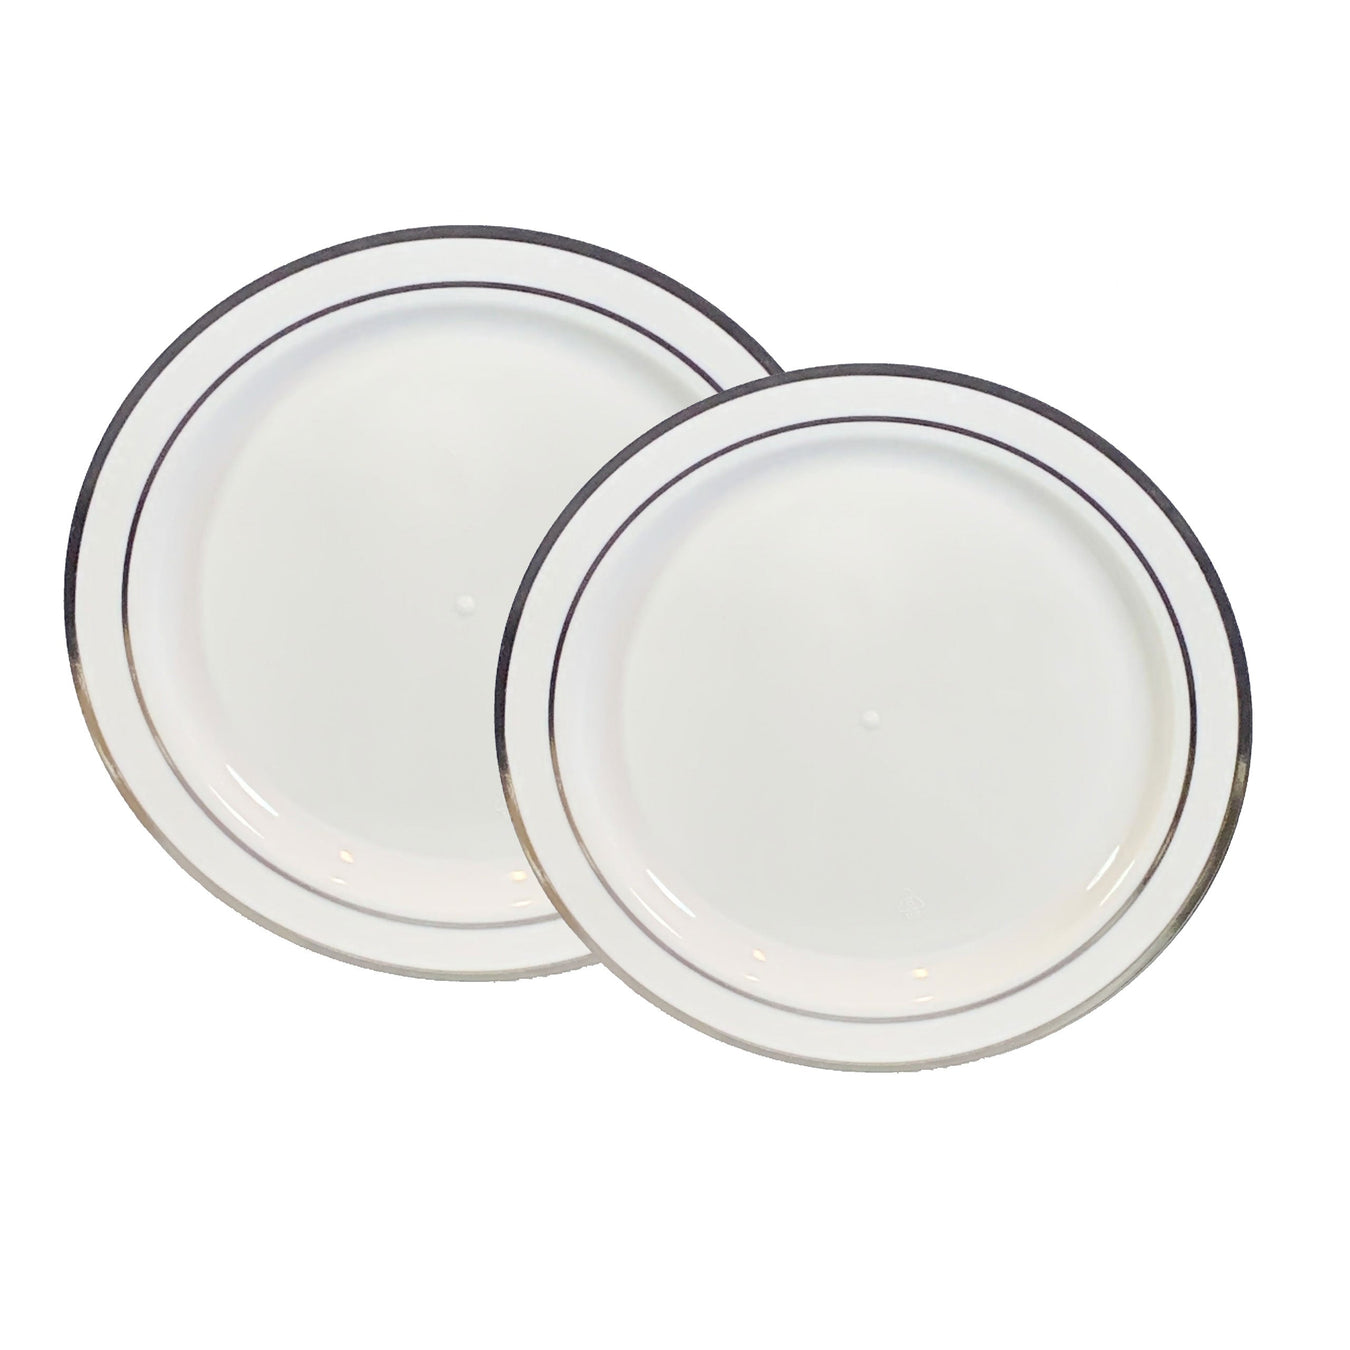 Plastic Plates & Bowls